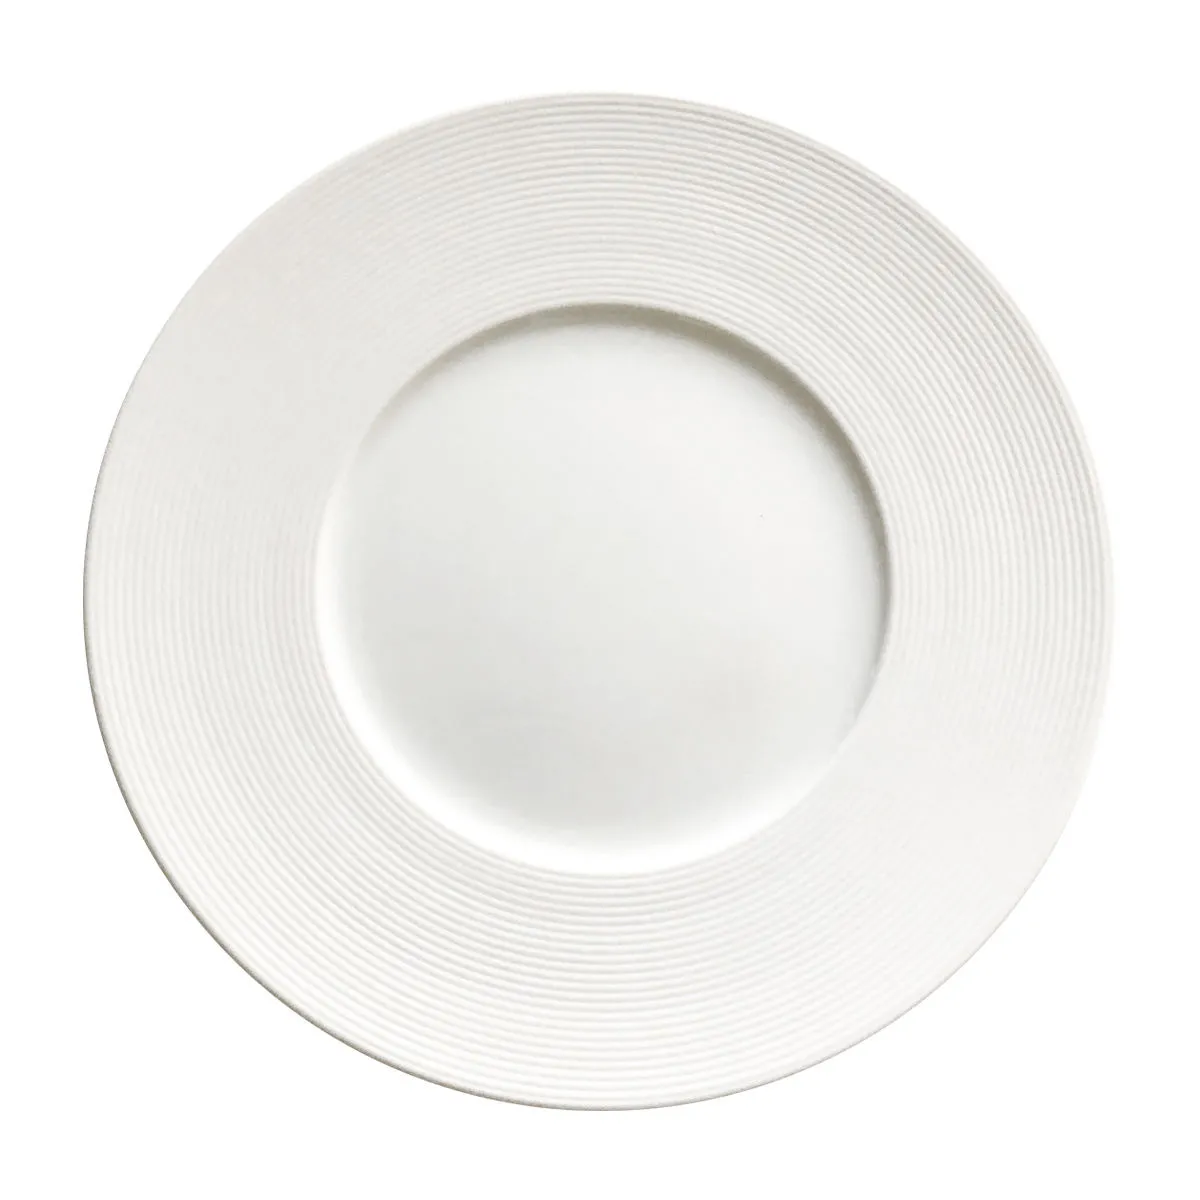 Assiette plate blanche en porcelaine 27cm - SOLARA - Bruno Evrard